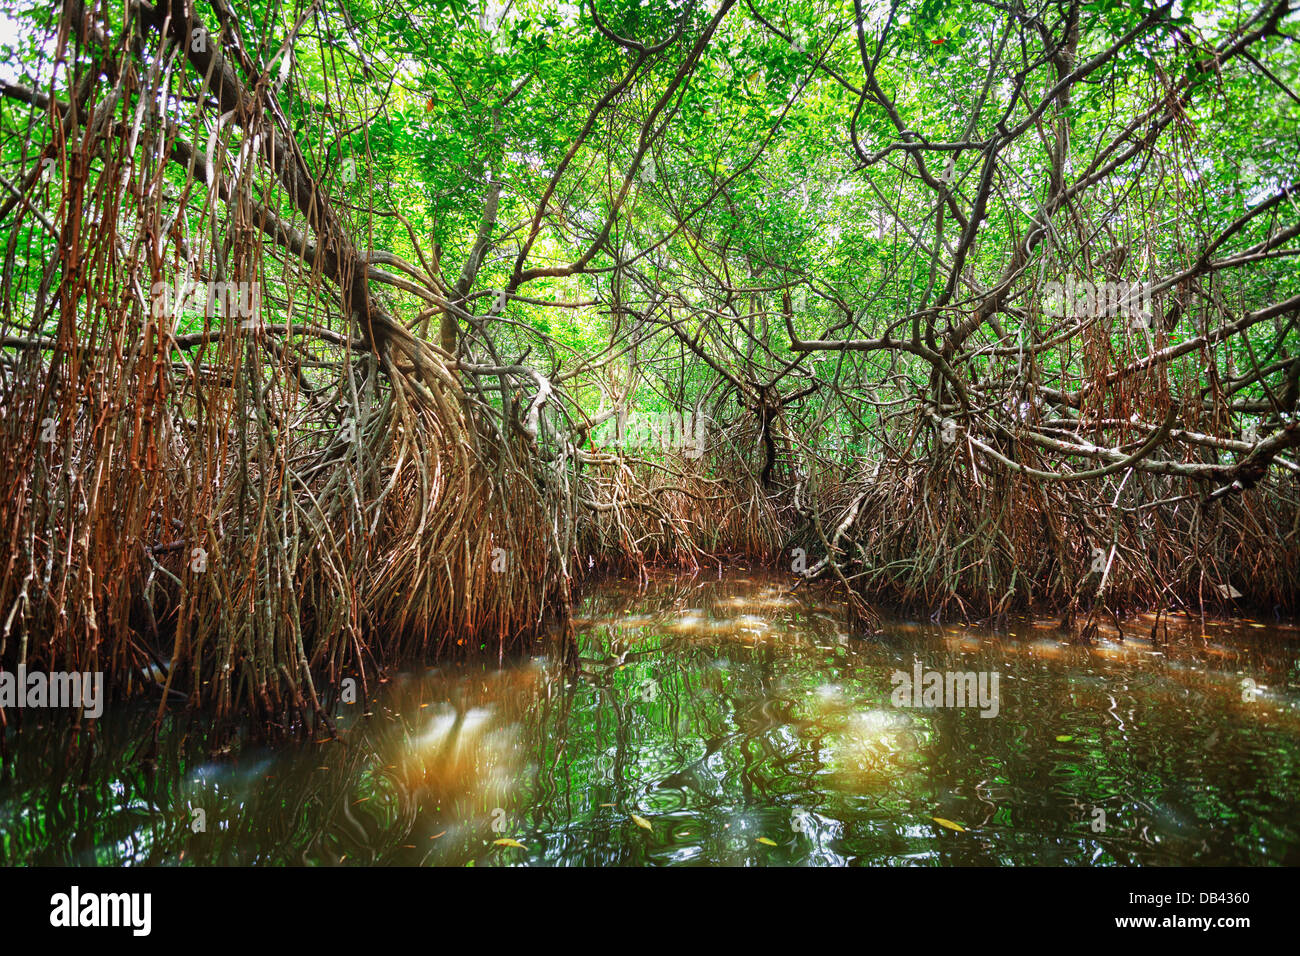 Thickets of mangrove trees in the tidal zone. Sri Lanka, Bentota Stock Photo